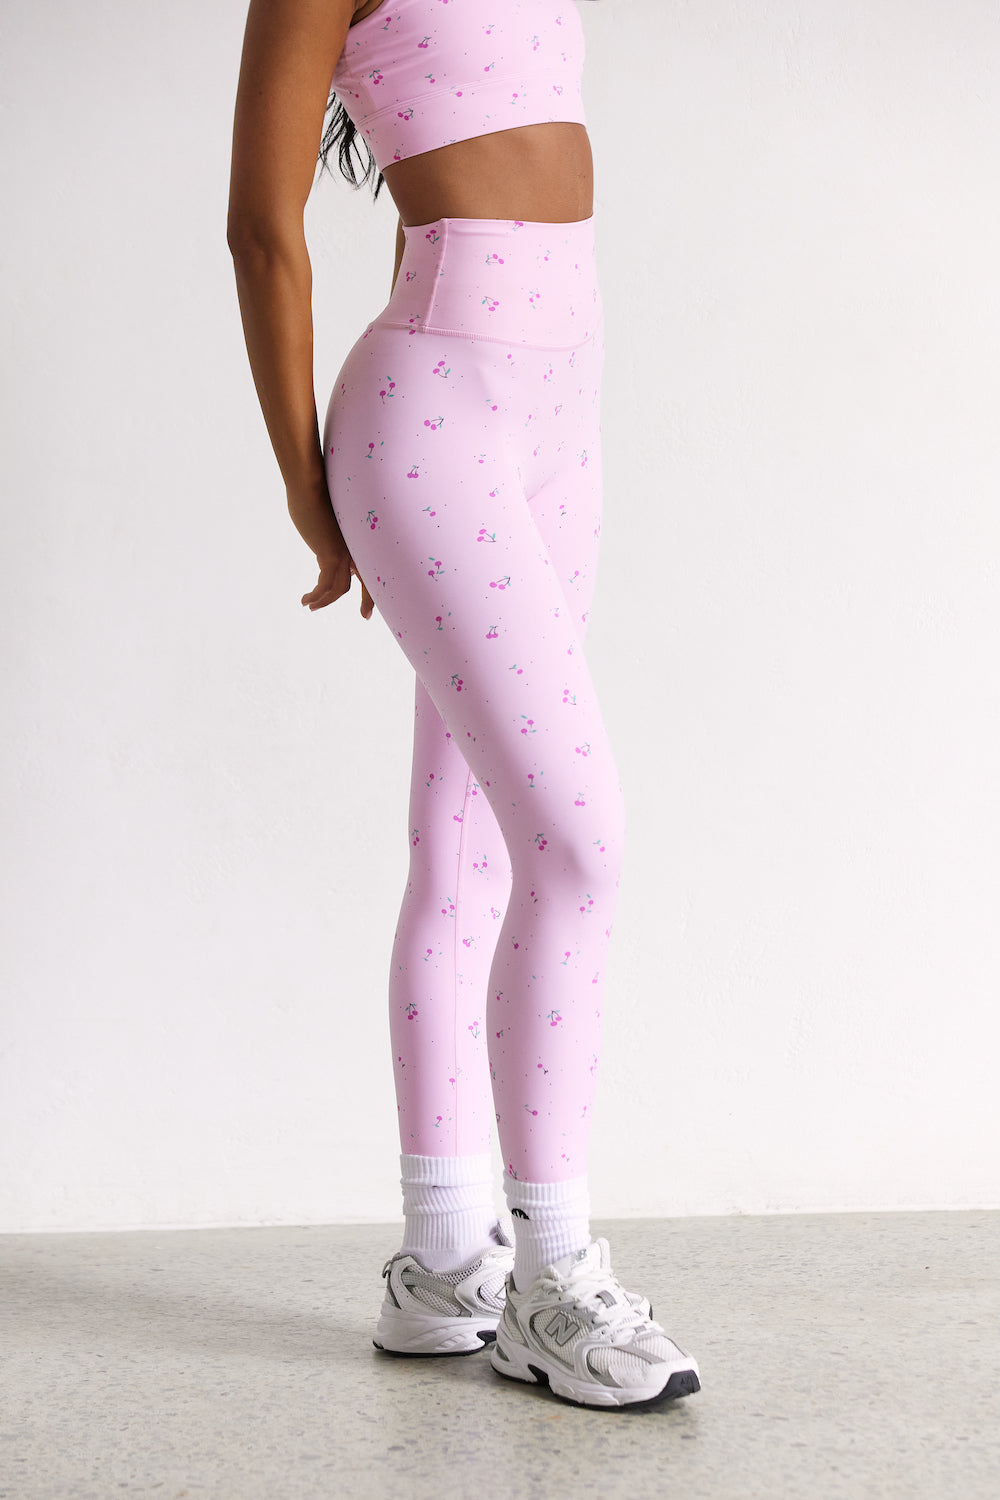 Astoria activewear RISE Seamless Short - Baby Pink M